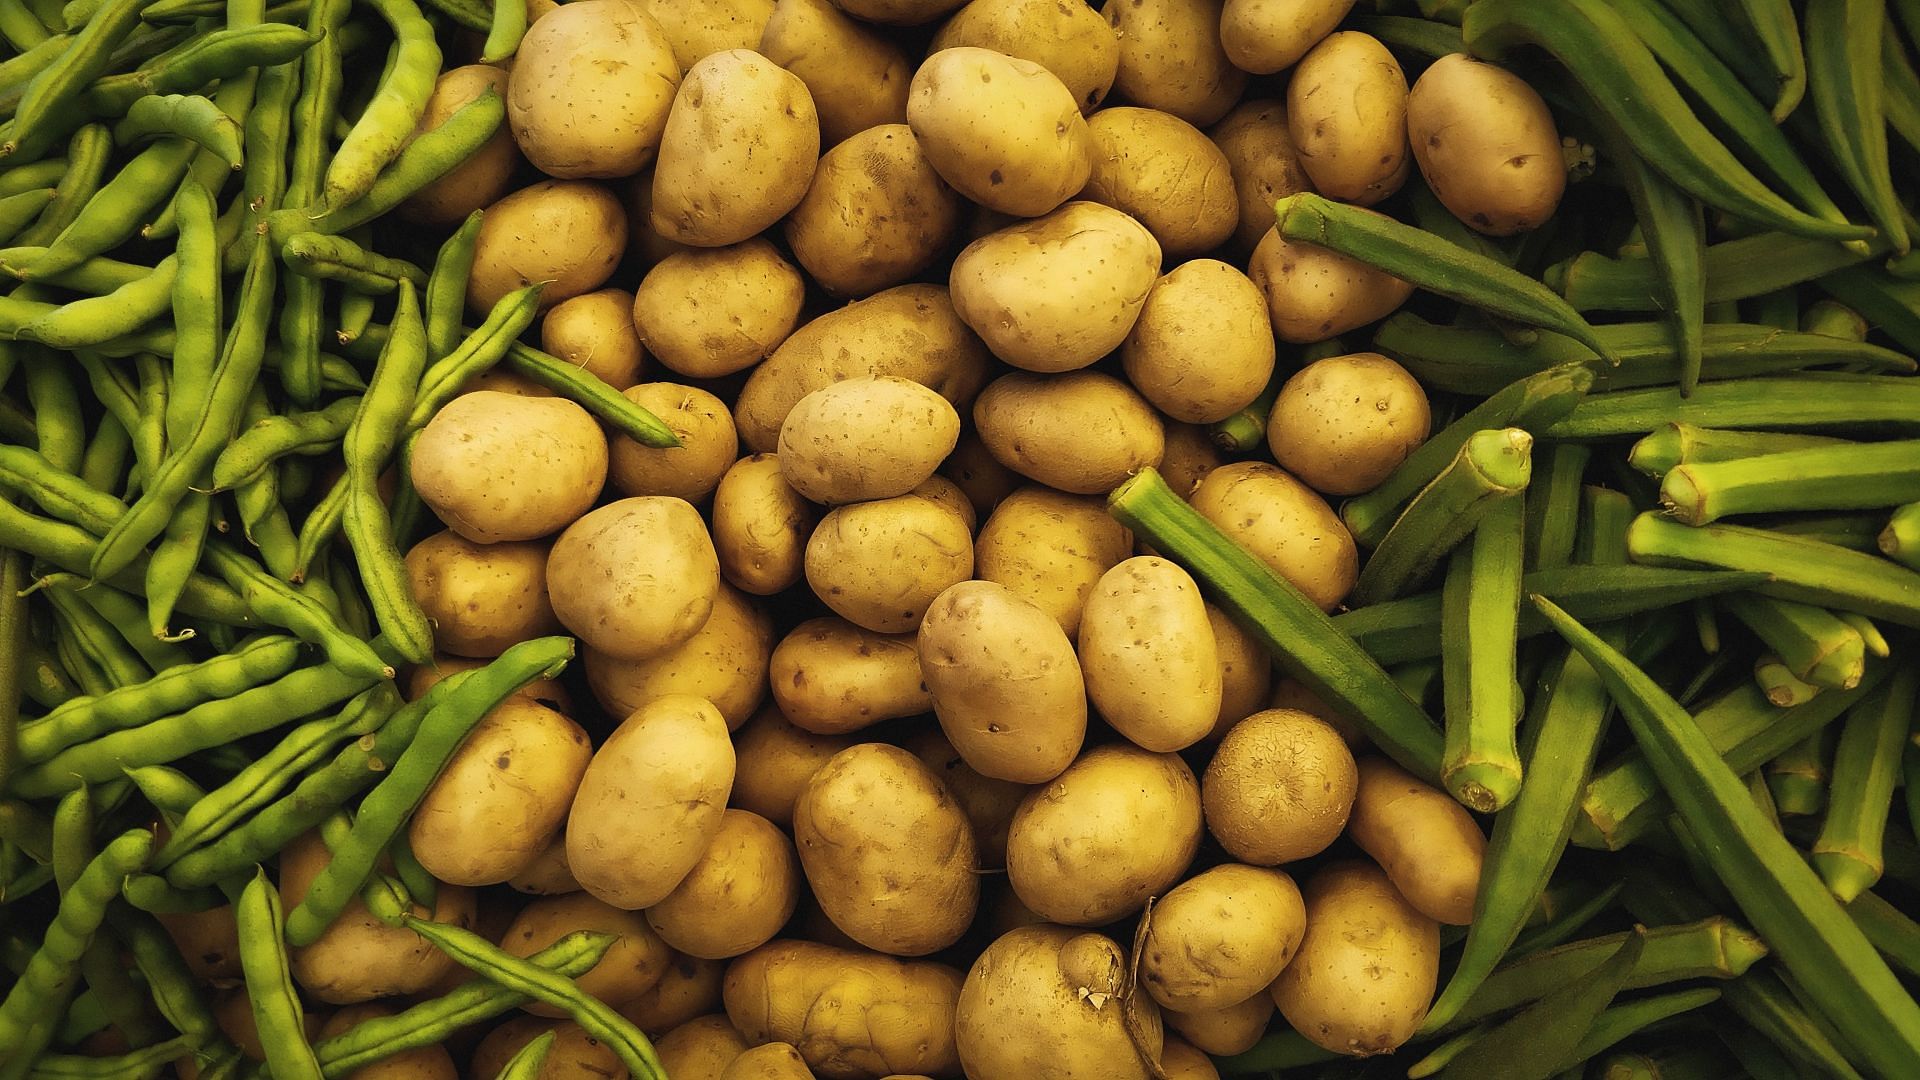 Potatoes can be consumed in various ways (Image via Unsplash/Prince Abid)